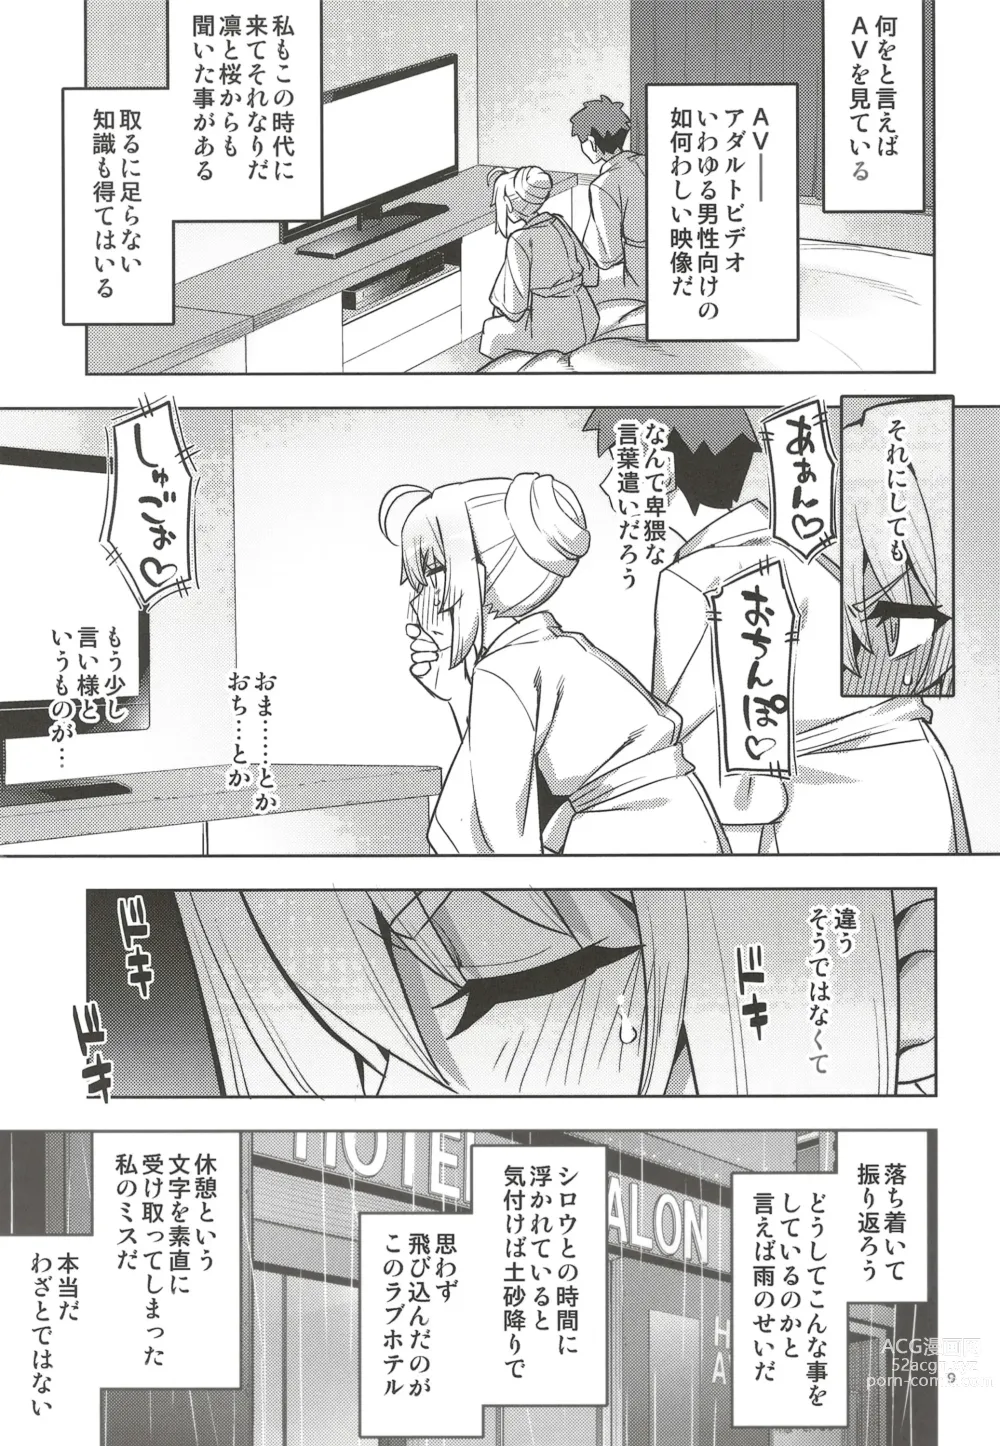 Page 9 of doujinshi RE32